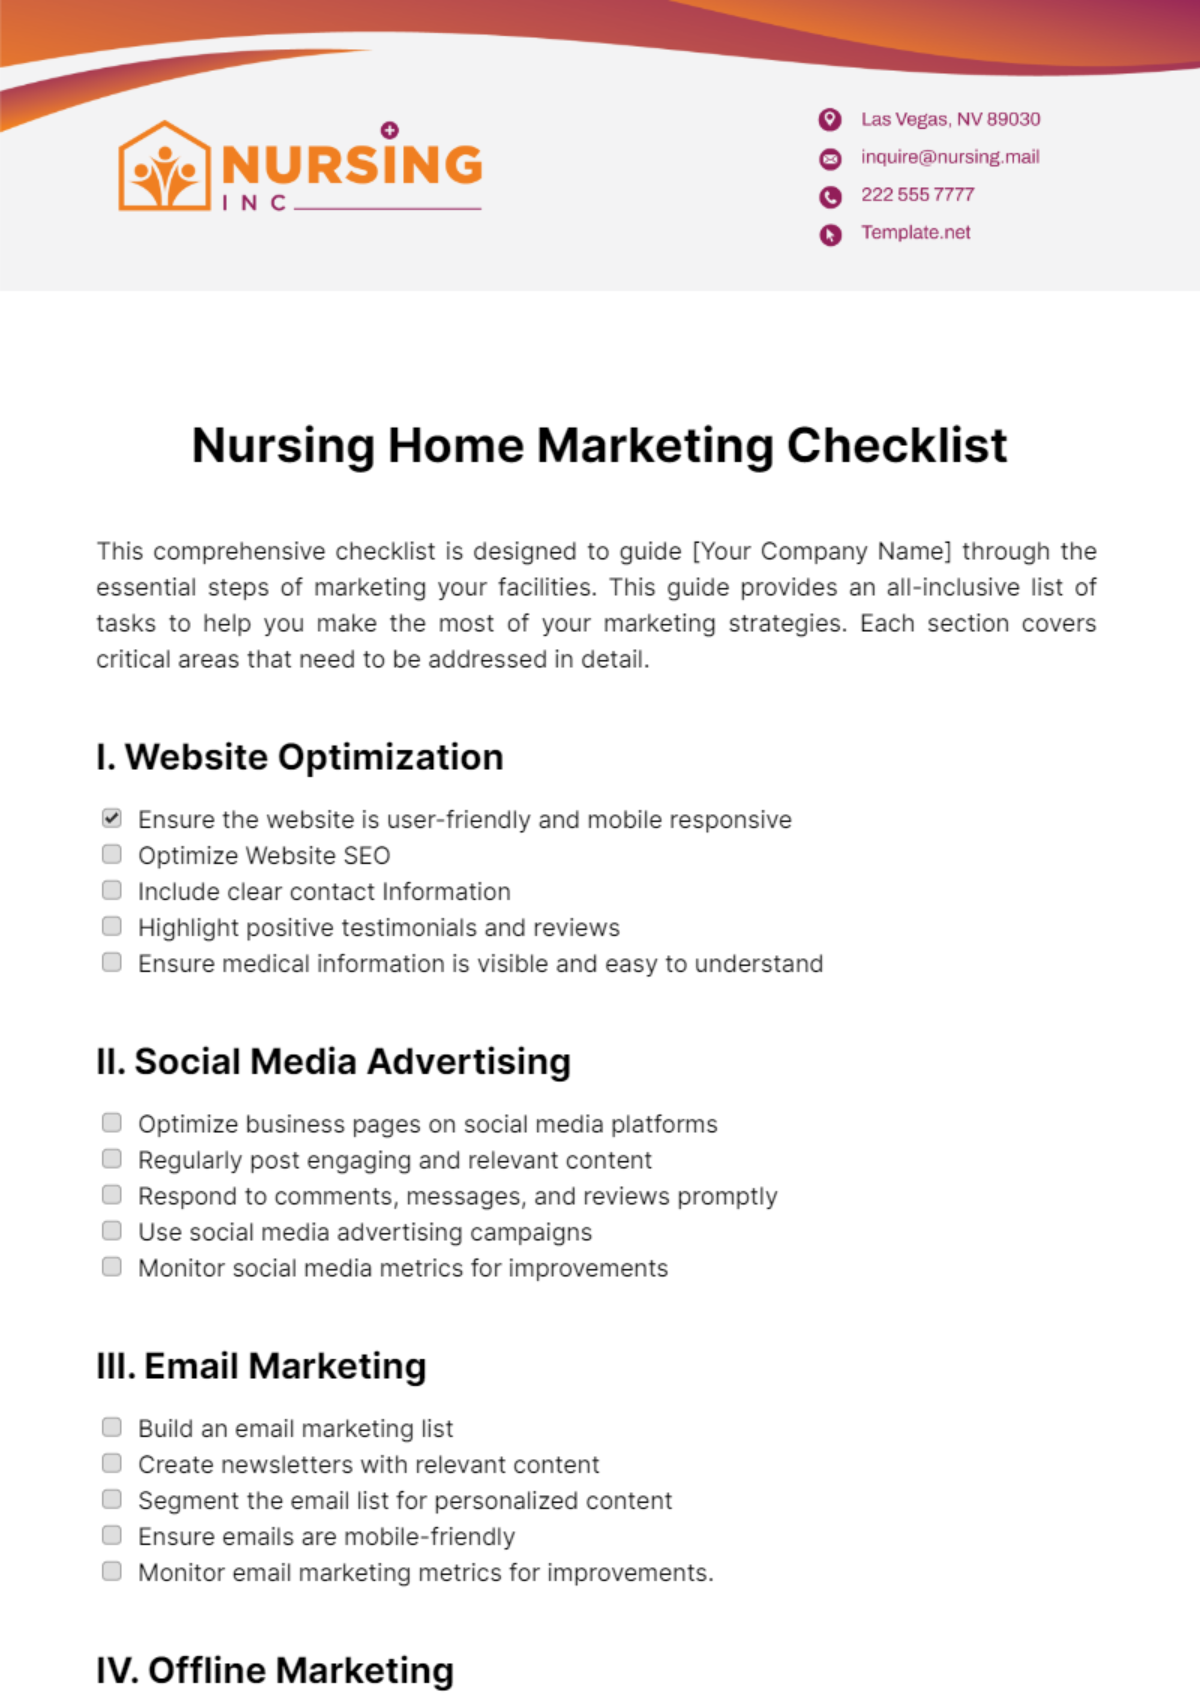 Nursing Home Marketing Checklist Template